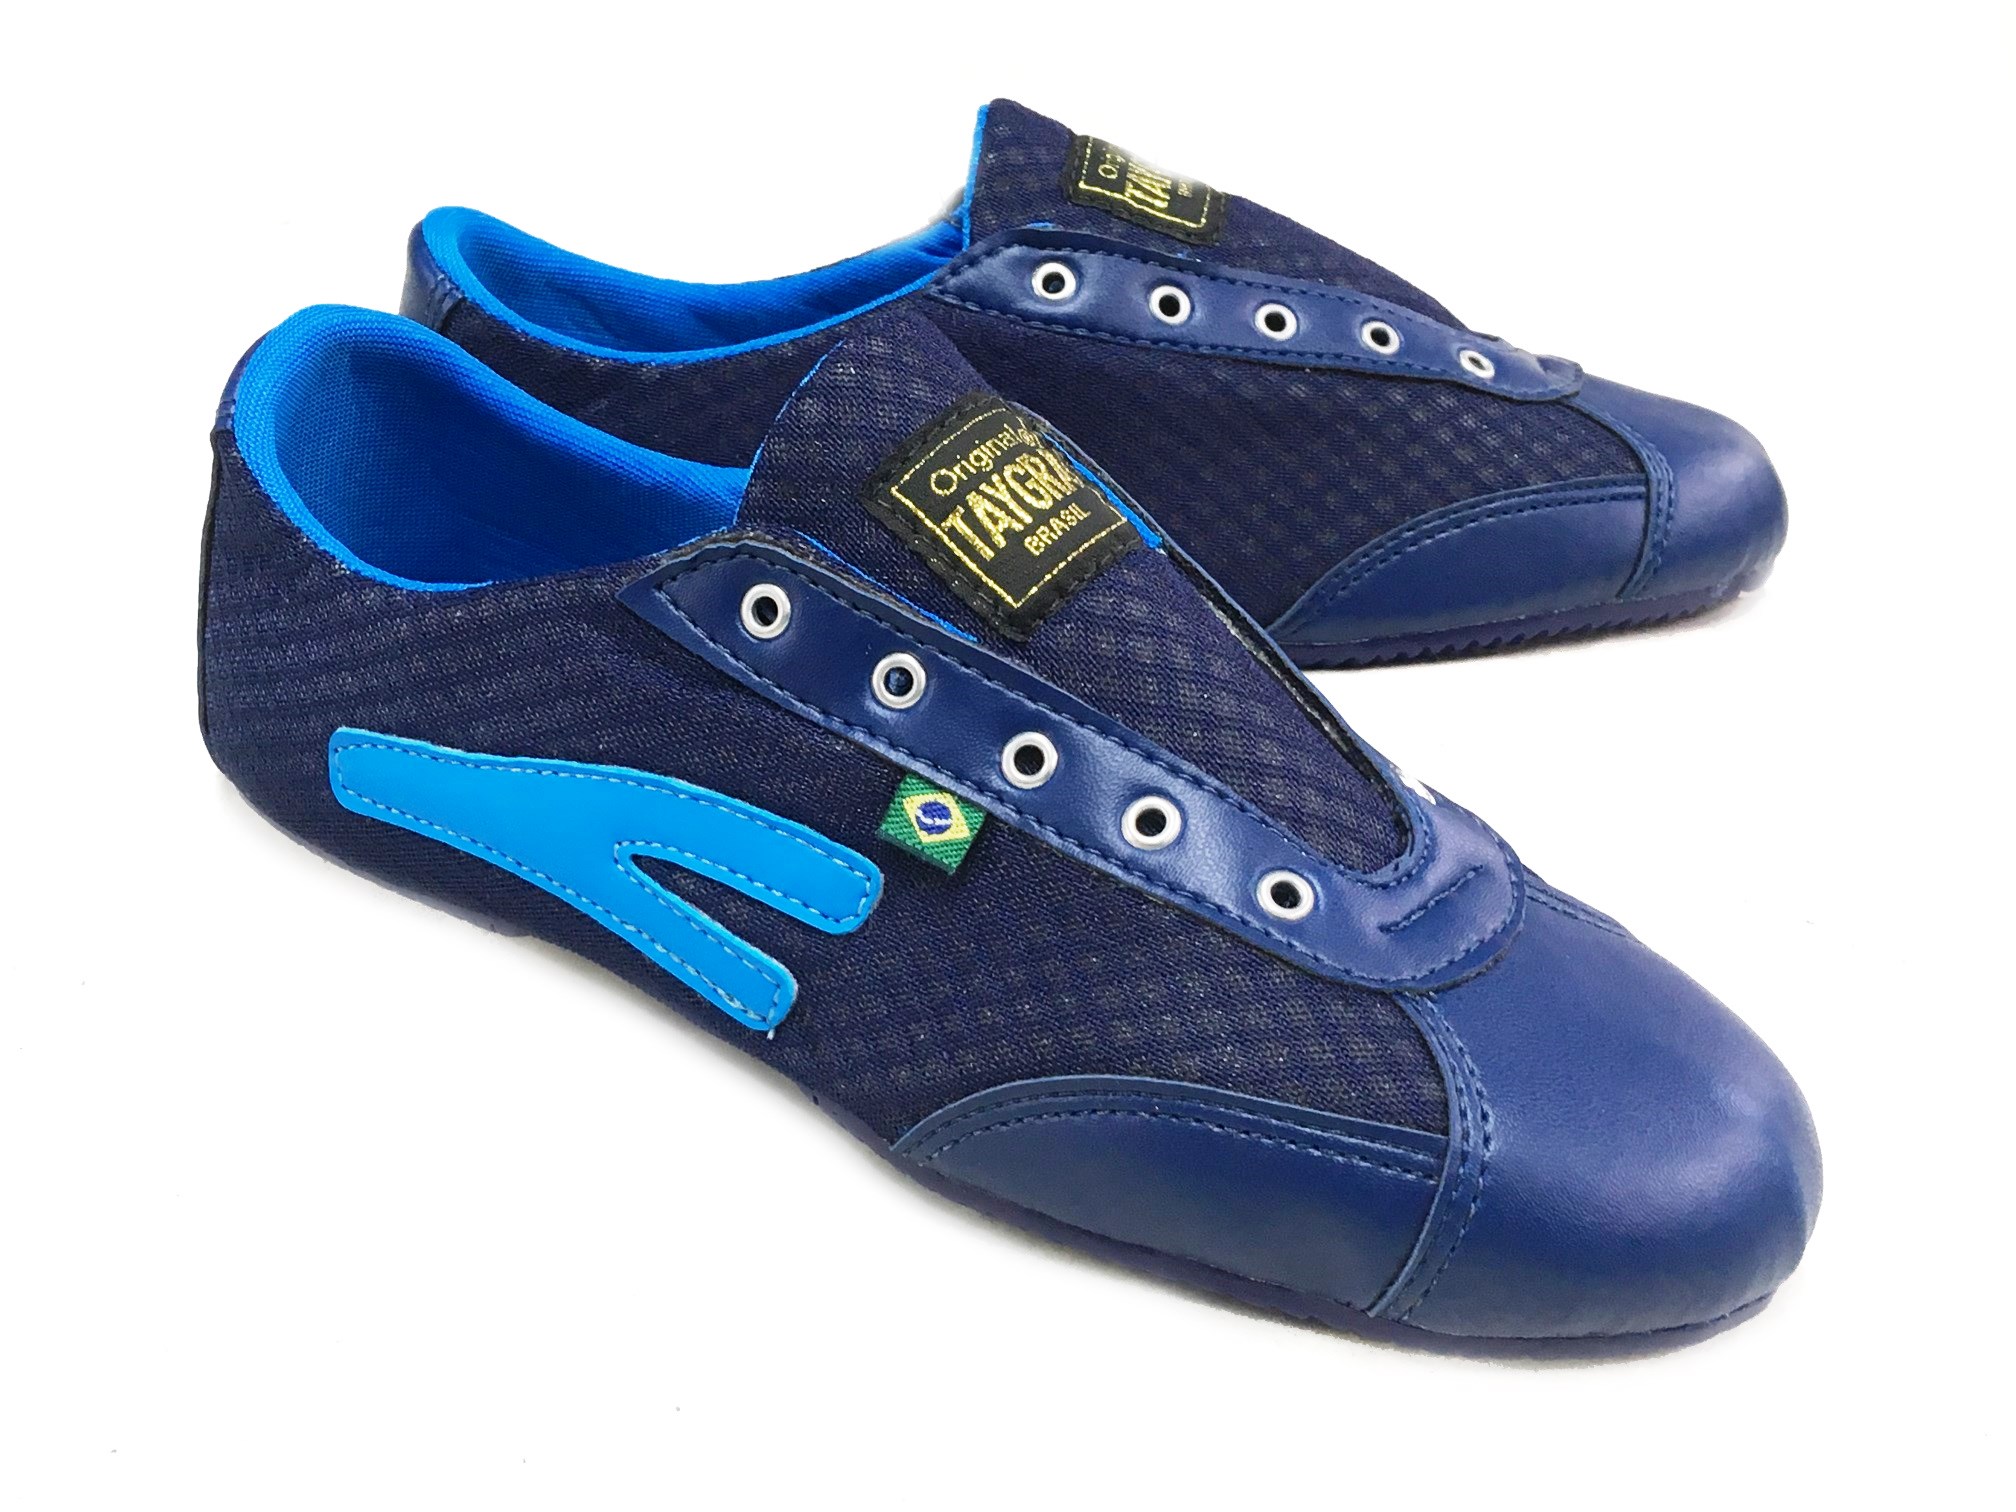 Chaussures TAYGRA slim bleu marine et turquoise